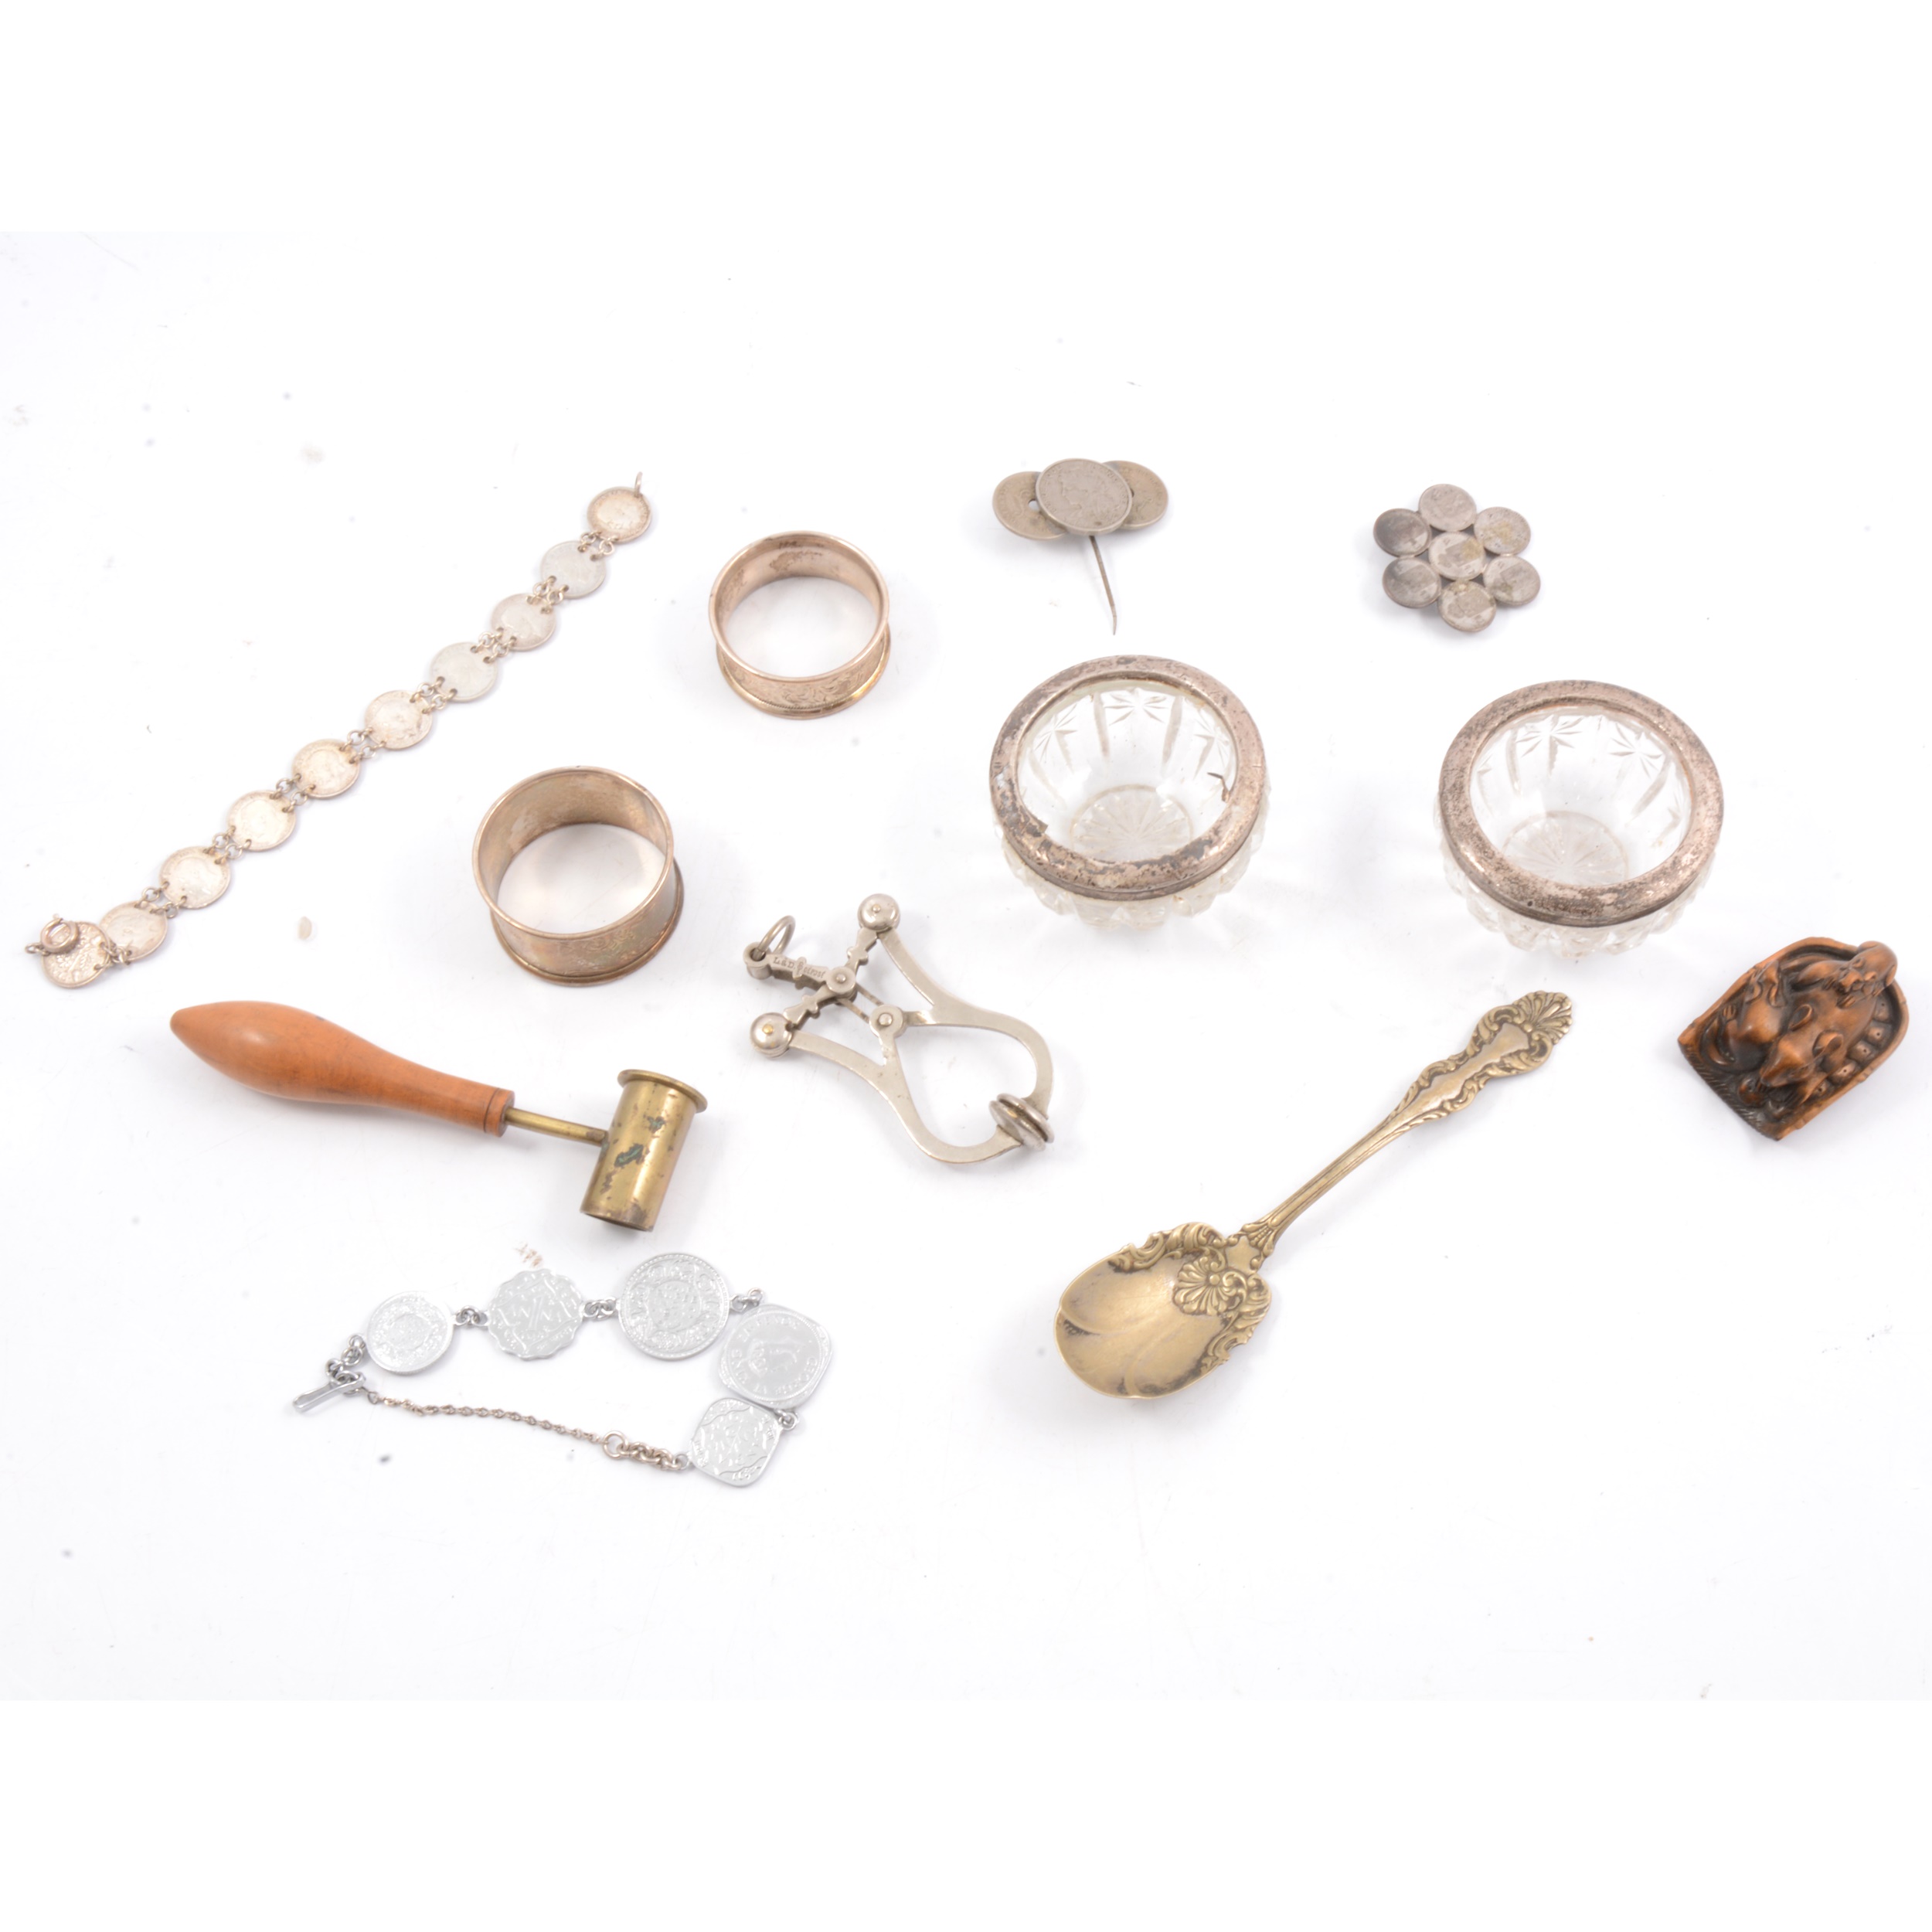 Silver napkin rings, French skirt lifter, netsuke, powder measure, coin jewellery.